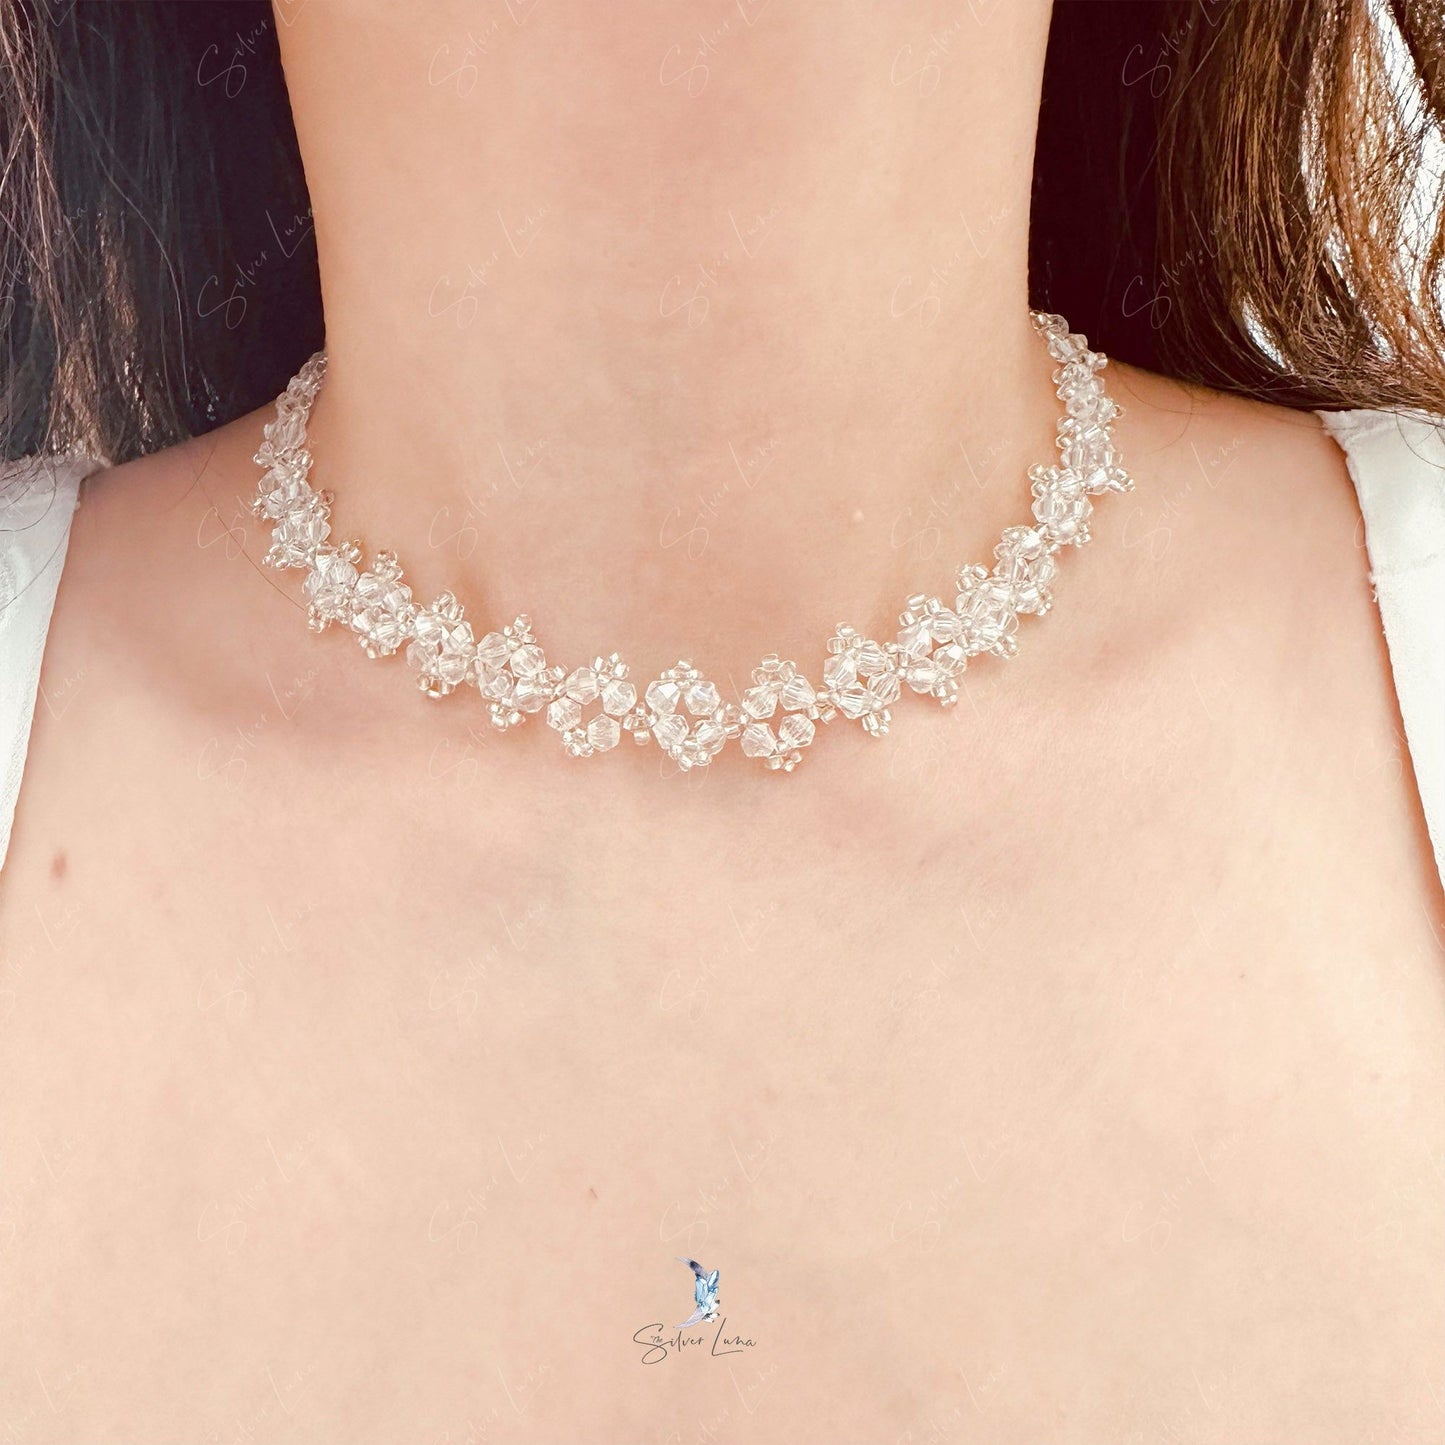 Crystal rhinestone choker bead necklace